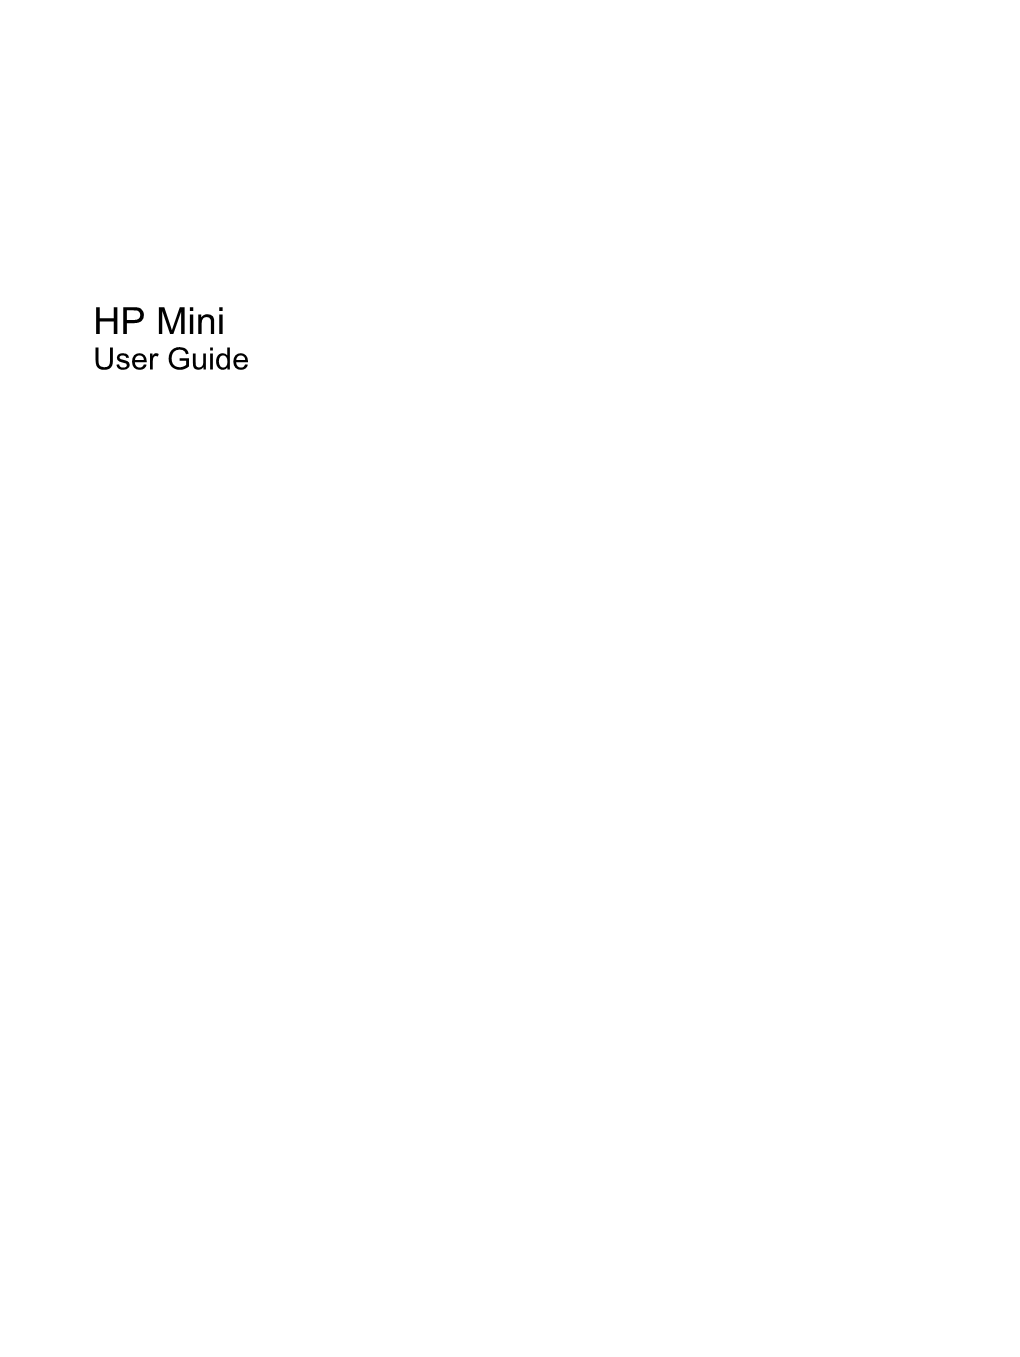 HP Mini User Guide © Copyright 2010 Hewlett-Packard Product Notice Development Company, L.P